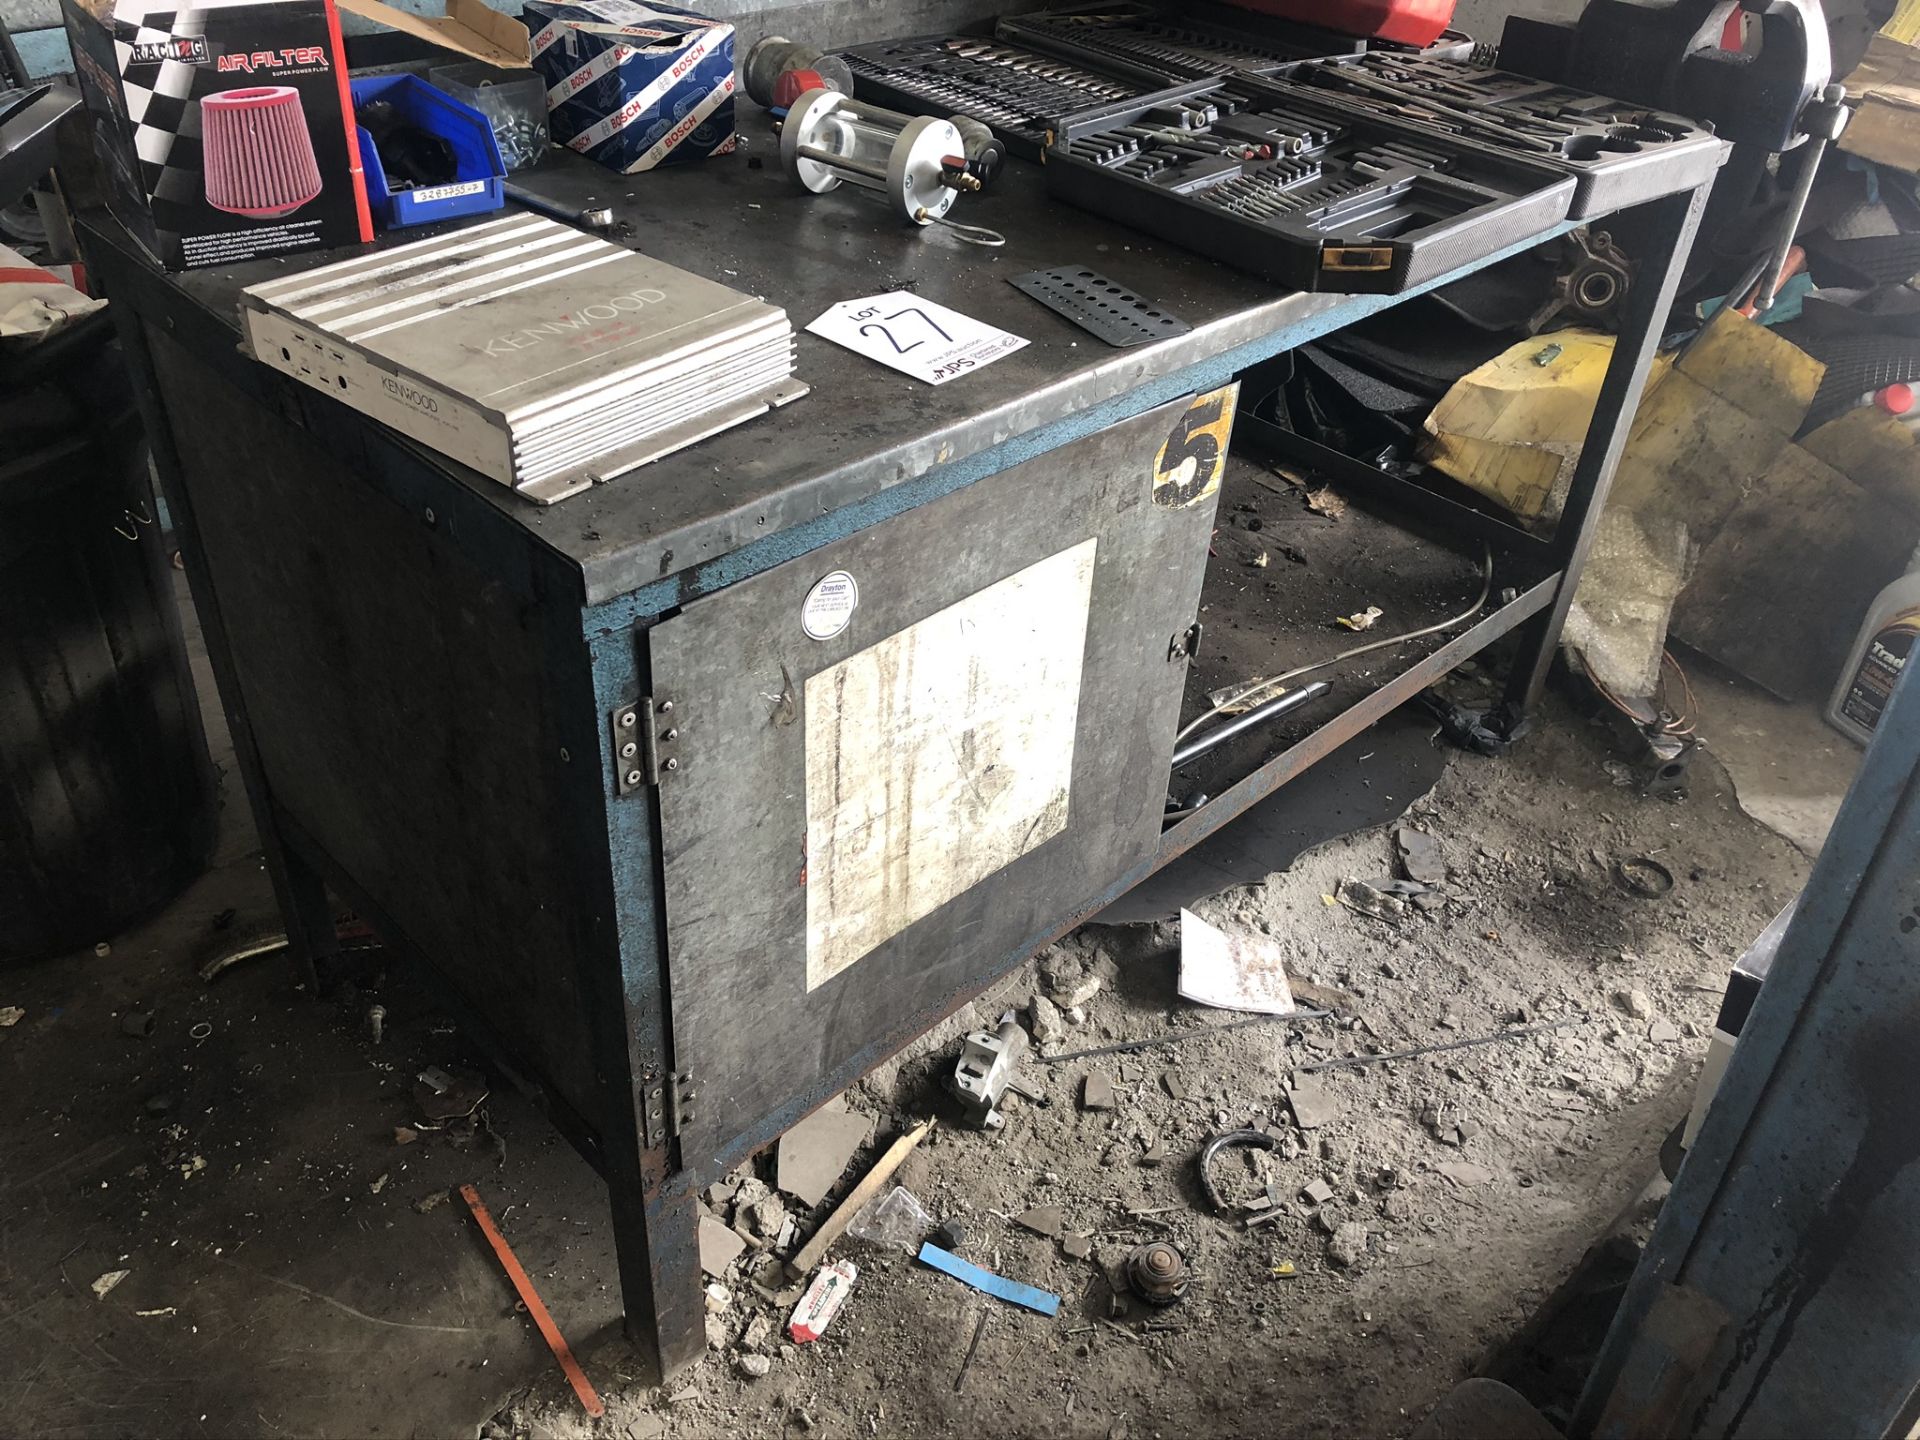 Metal Workbench w/ Cupboard, Undershelf & Mechanical Vice